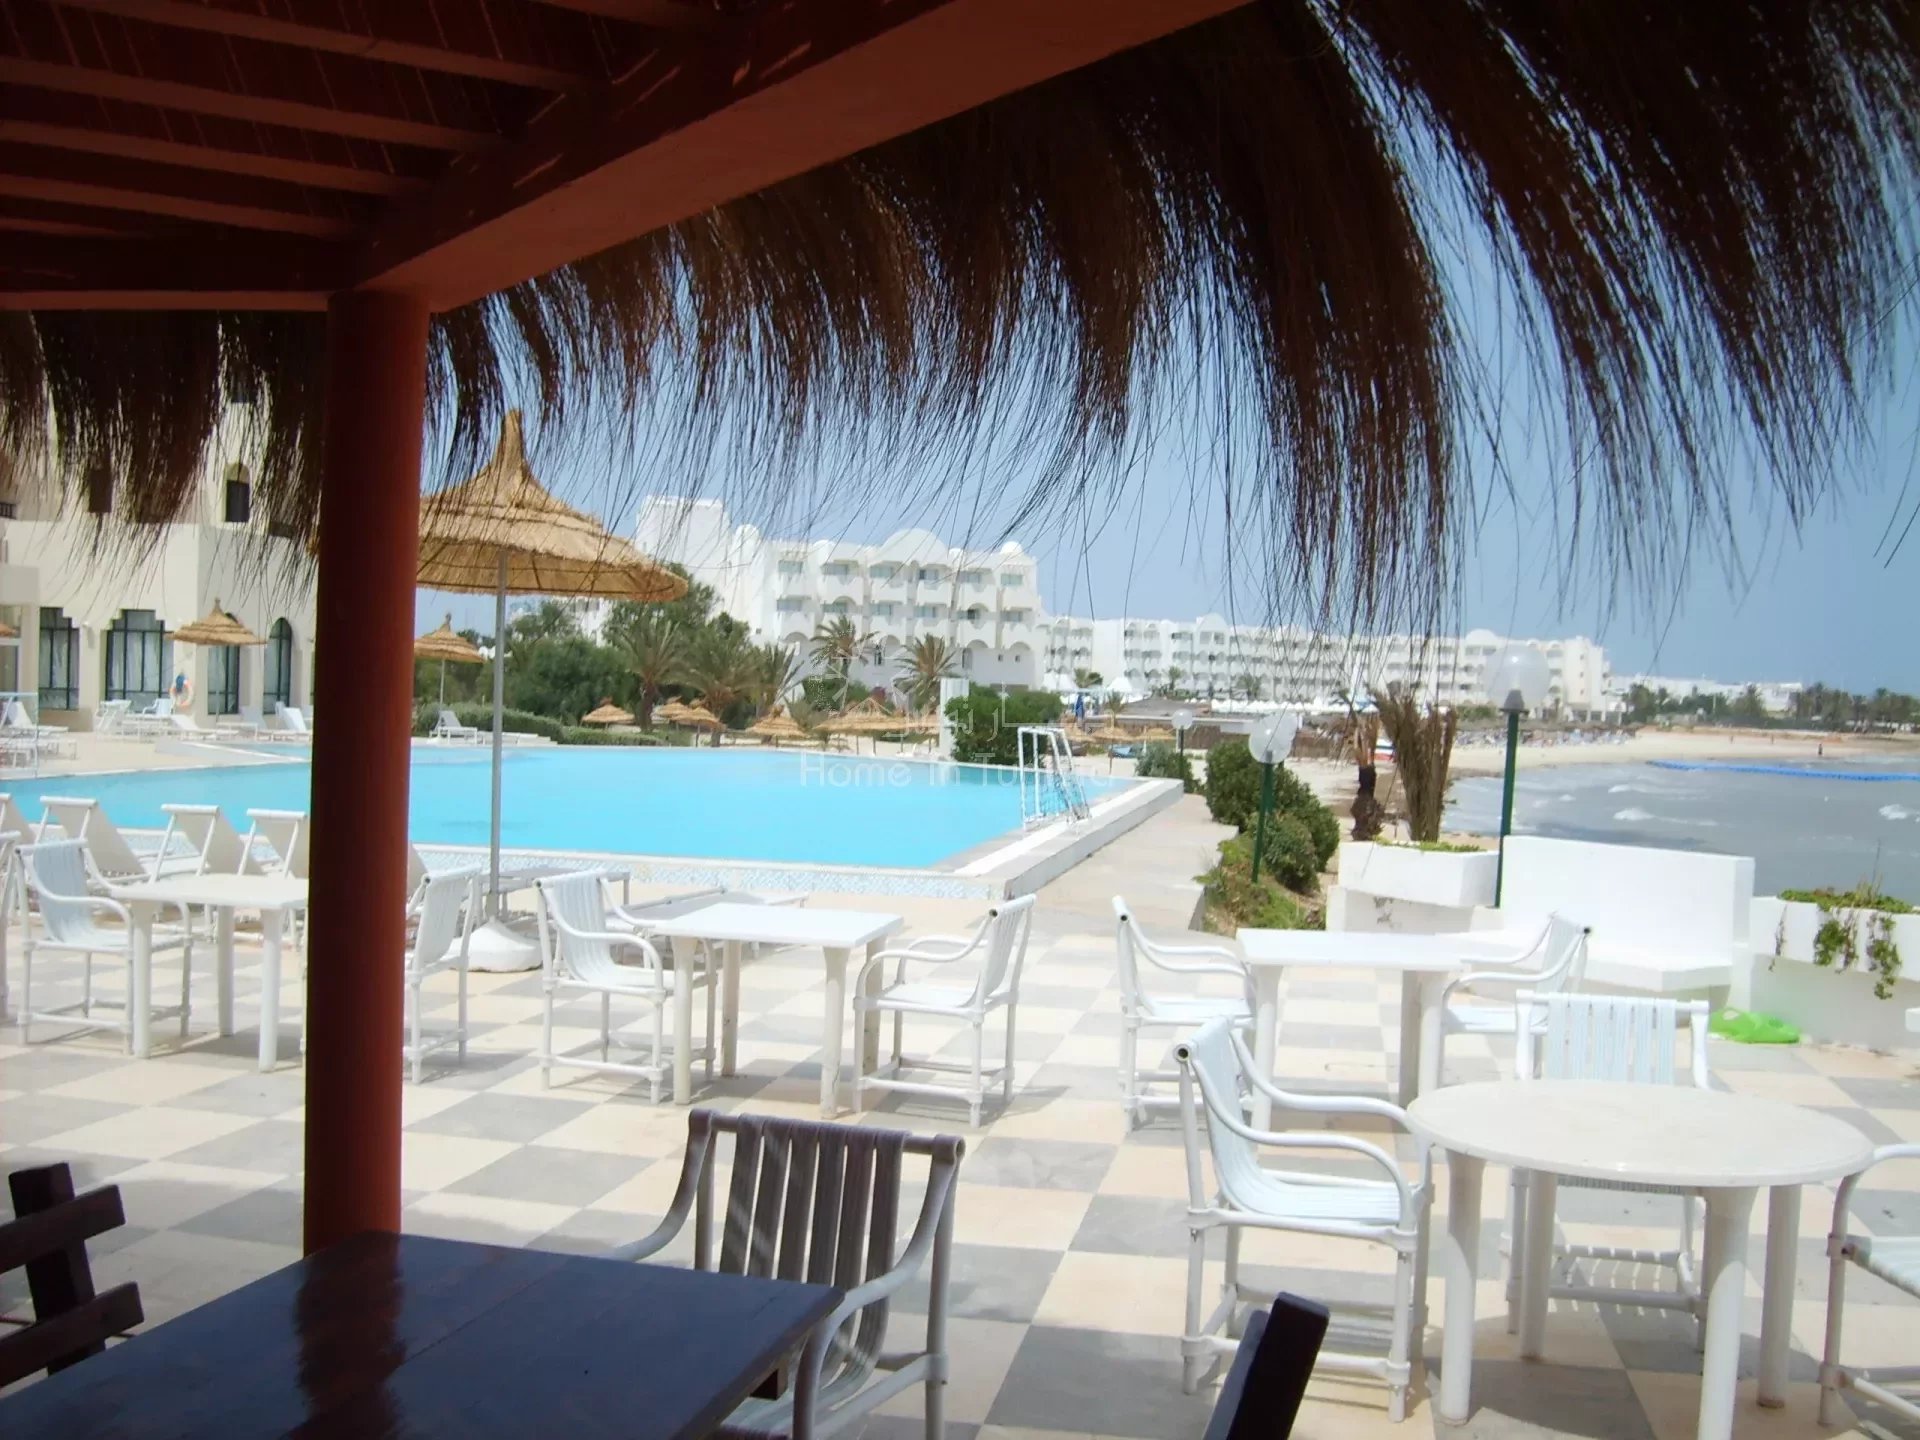 frontline beach 3 * Hotel to let in Djerba Tunisia